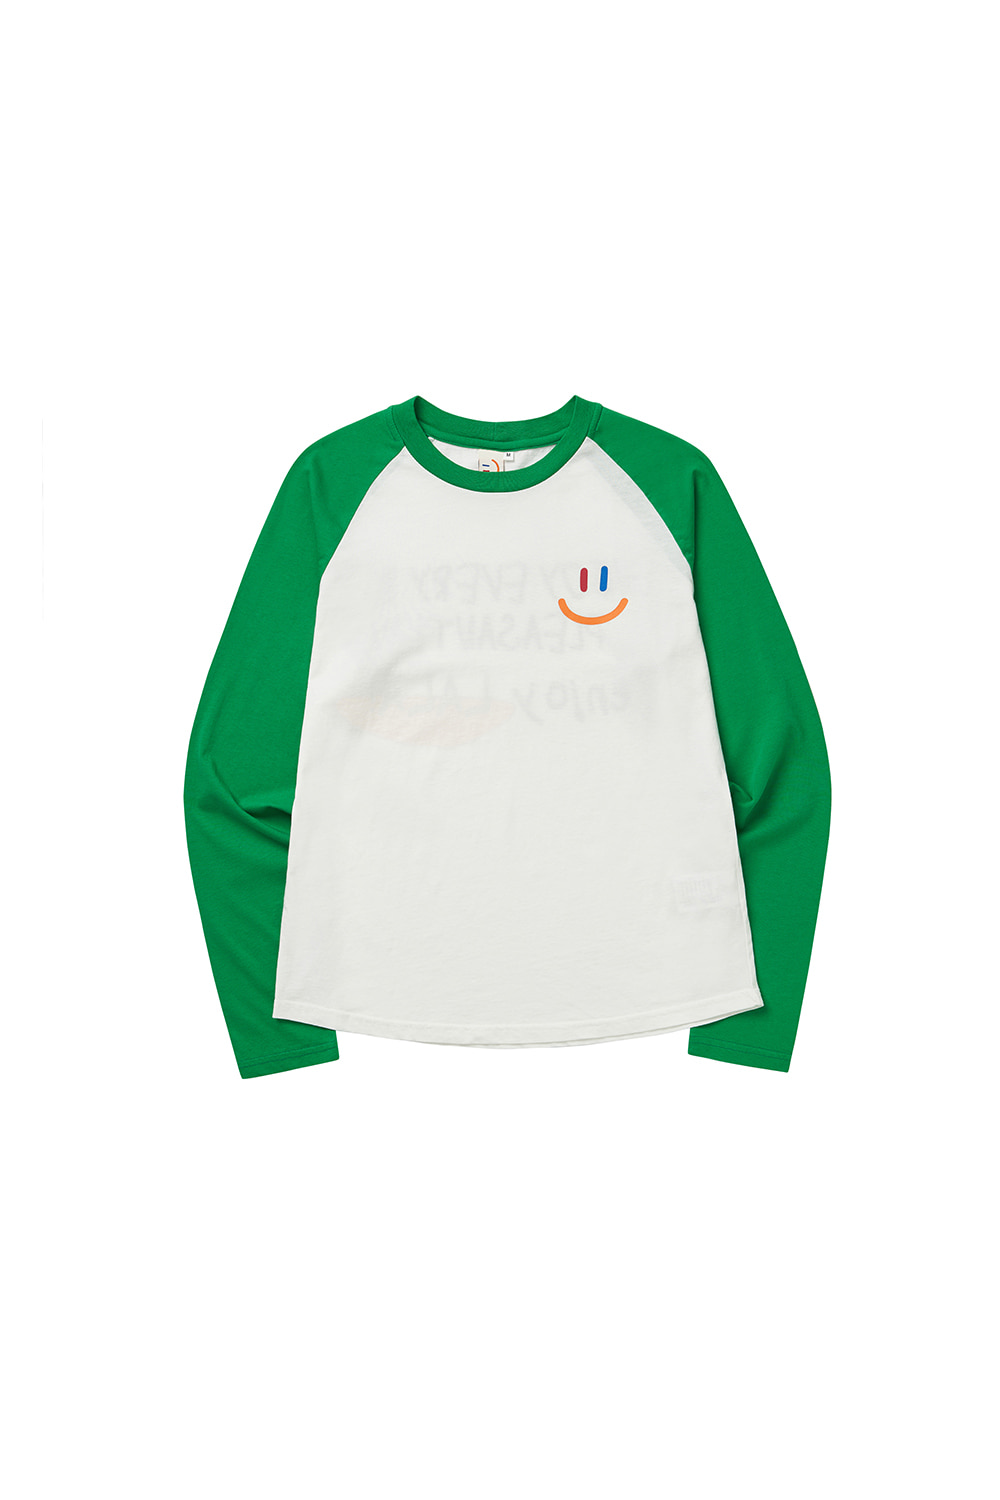 LaLa Kids Raglan T-Shirt [Green]